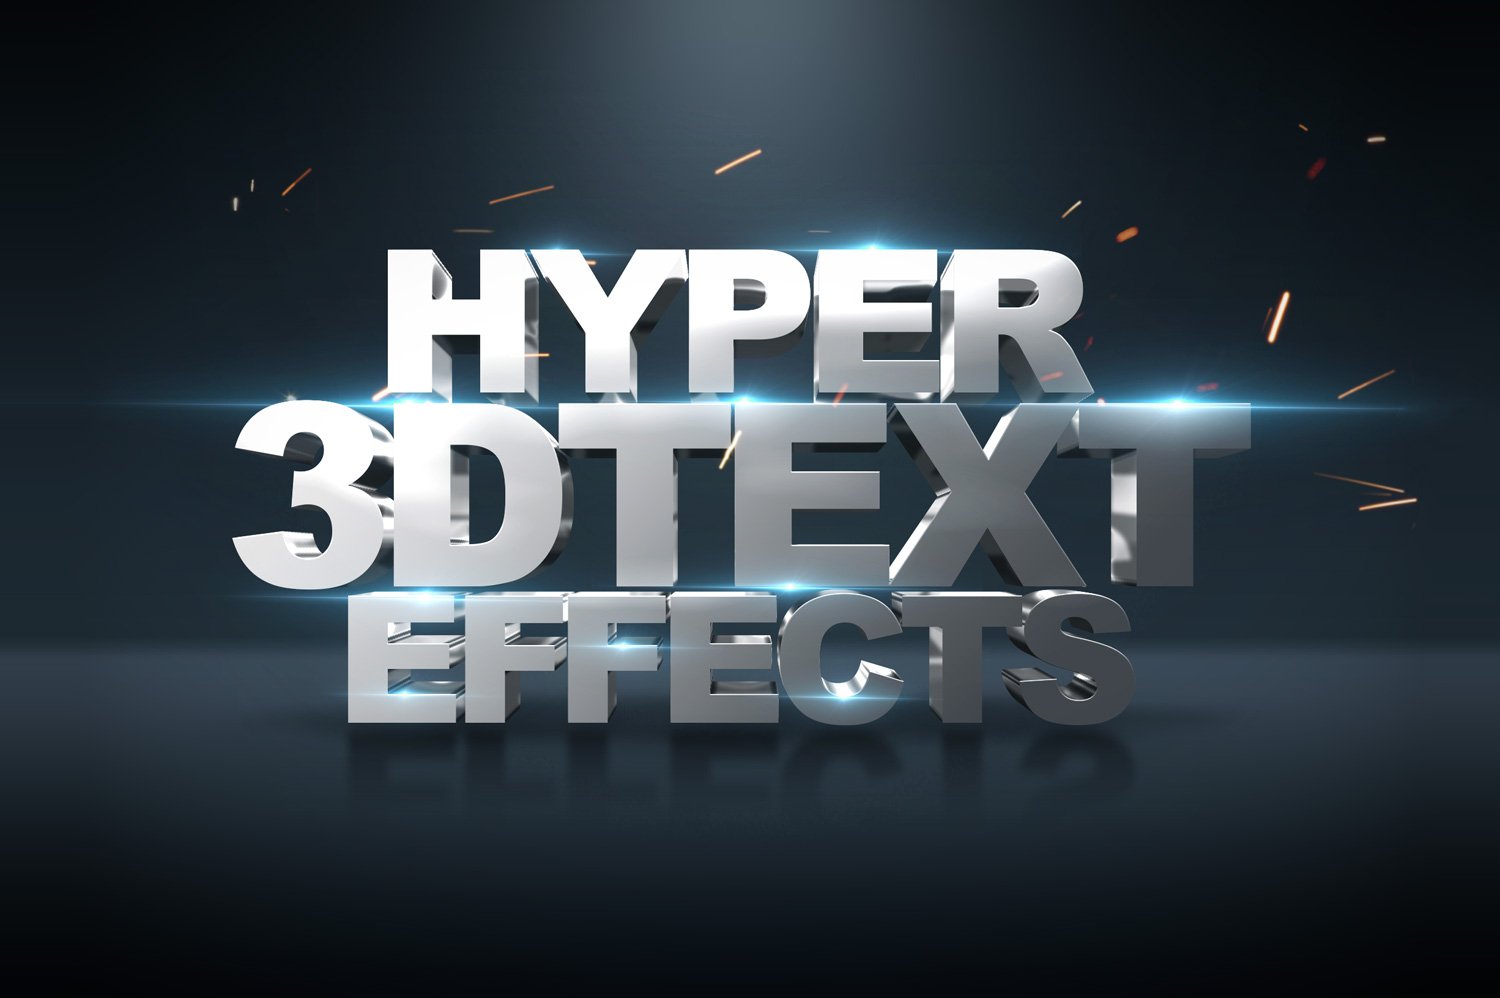 3d text effects 4 152